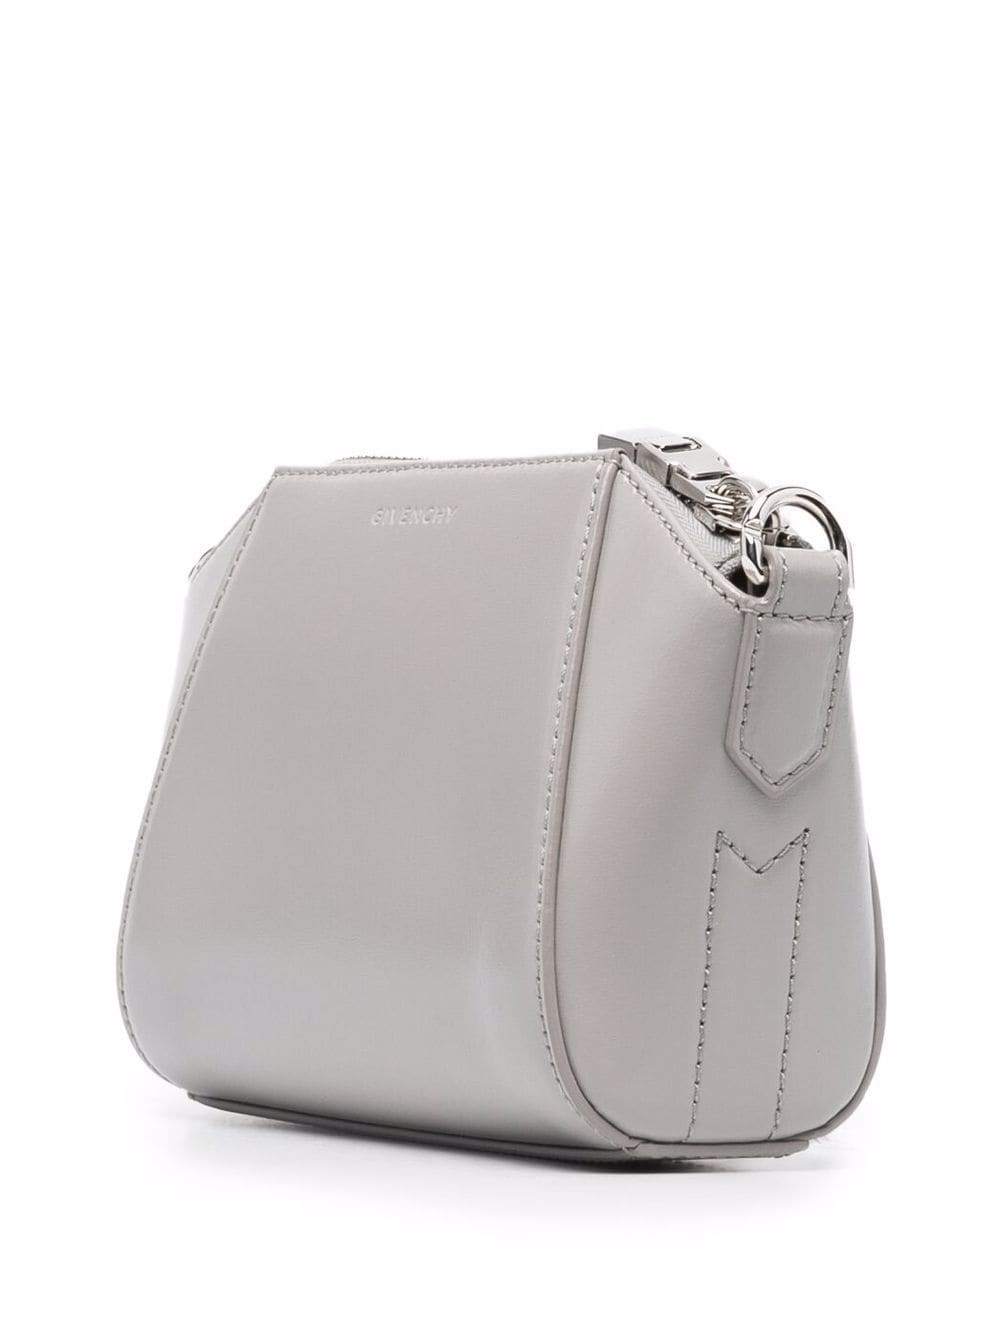 Givenchy Antigona Crossbody Bag Leather Nano White 2215239